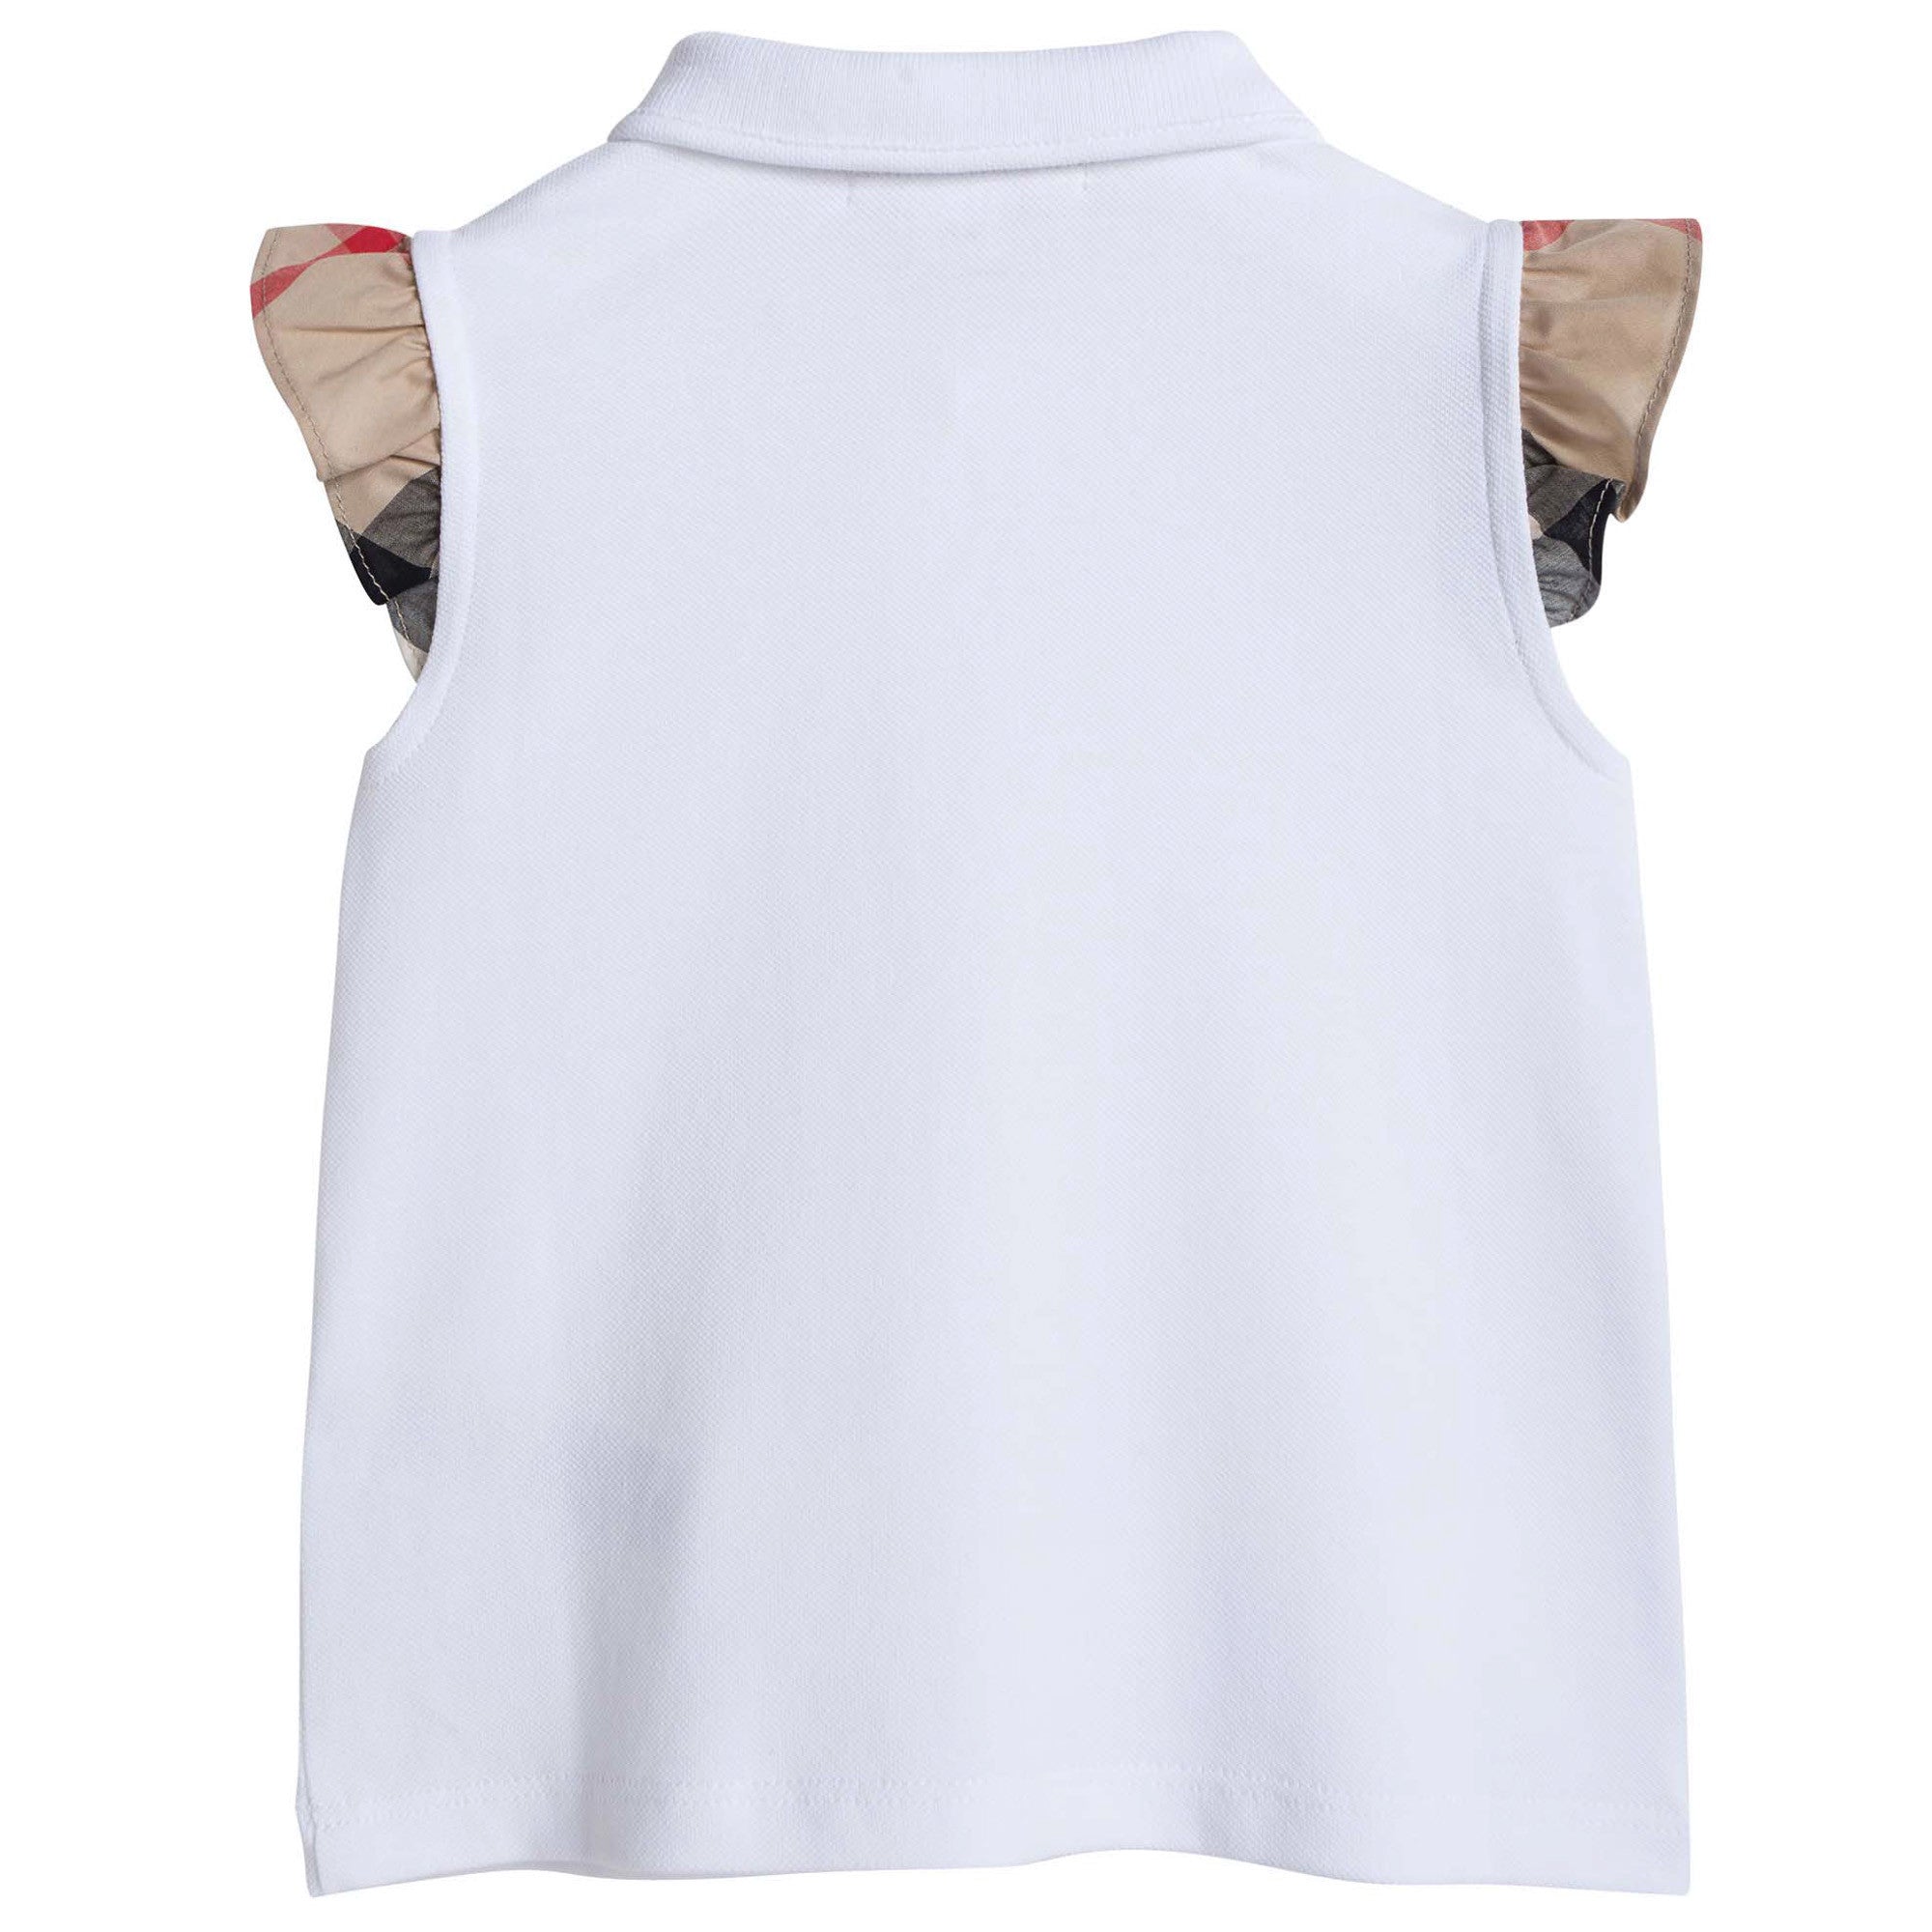 Baby Girls White Check Frill Cuffs Blouse - CÉMAROSE | Children's Fashion Store - 2